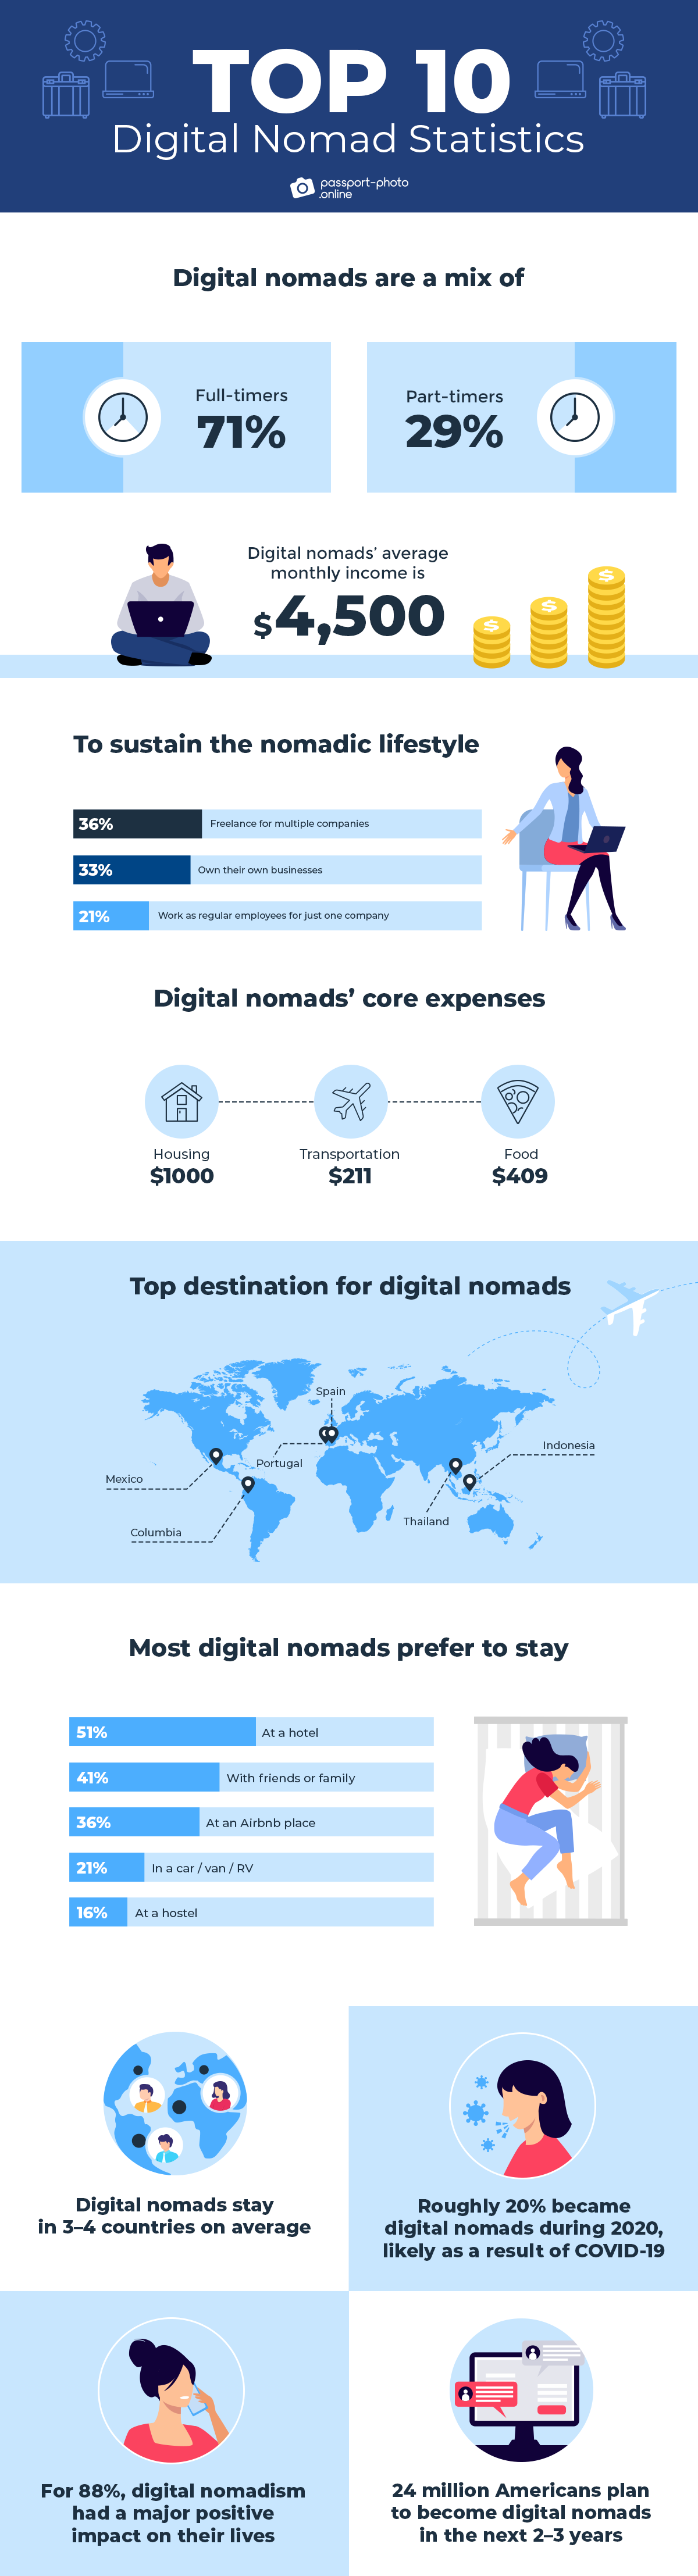 TOP 10 Digital Nomad Statistics